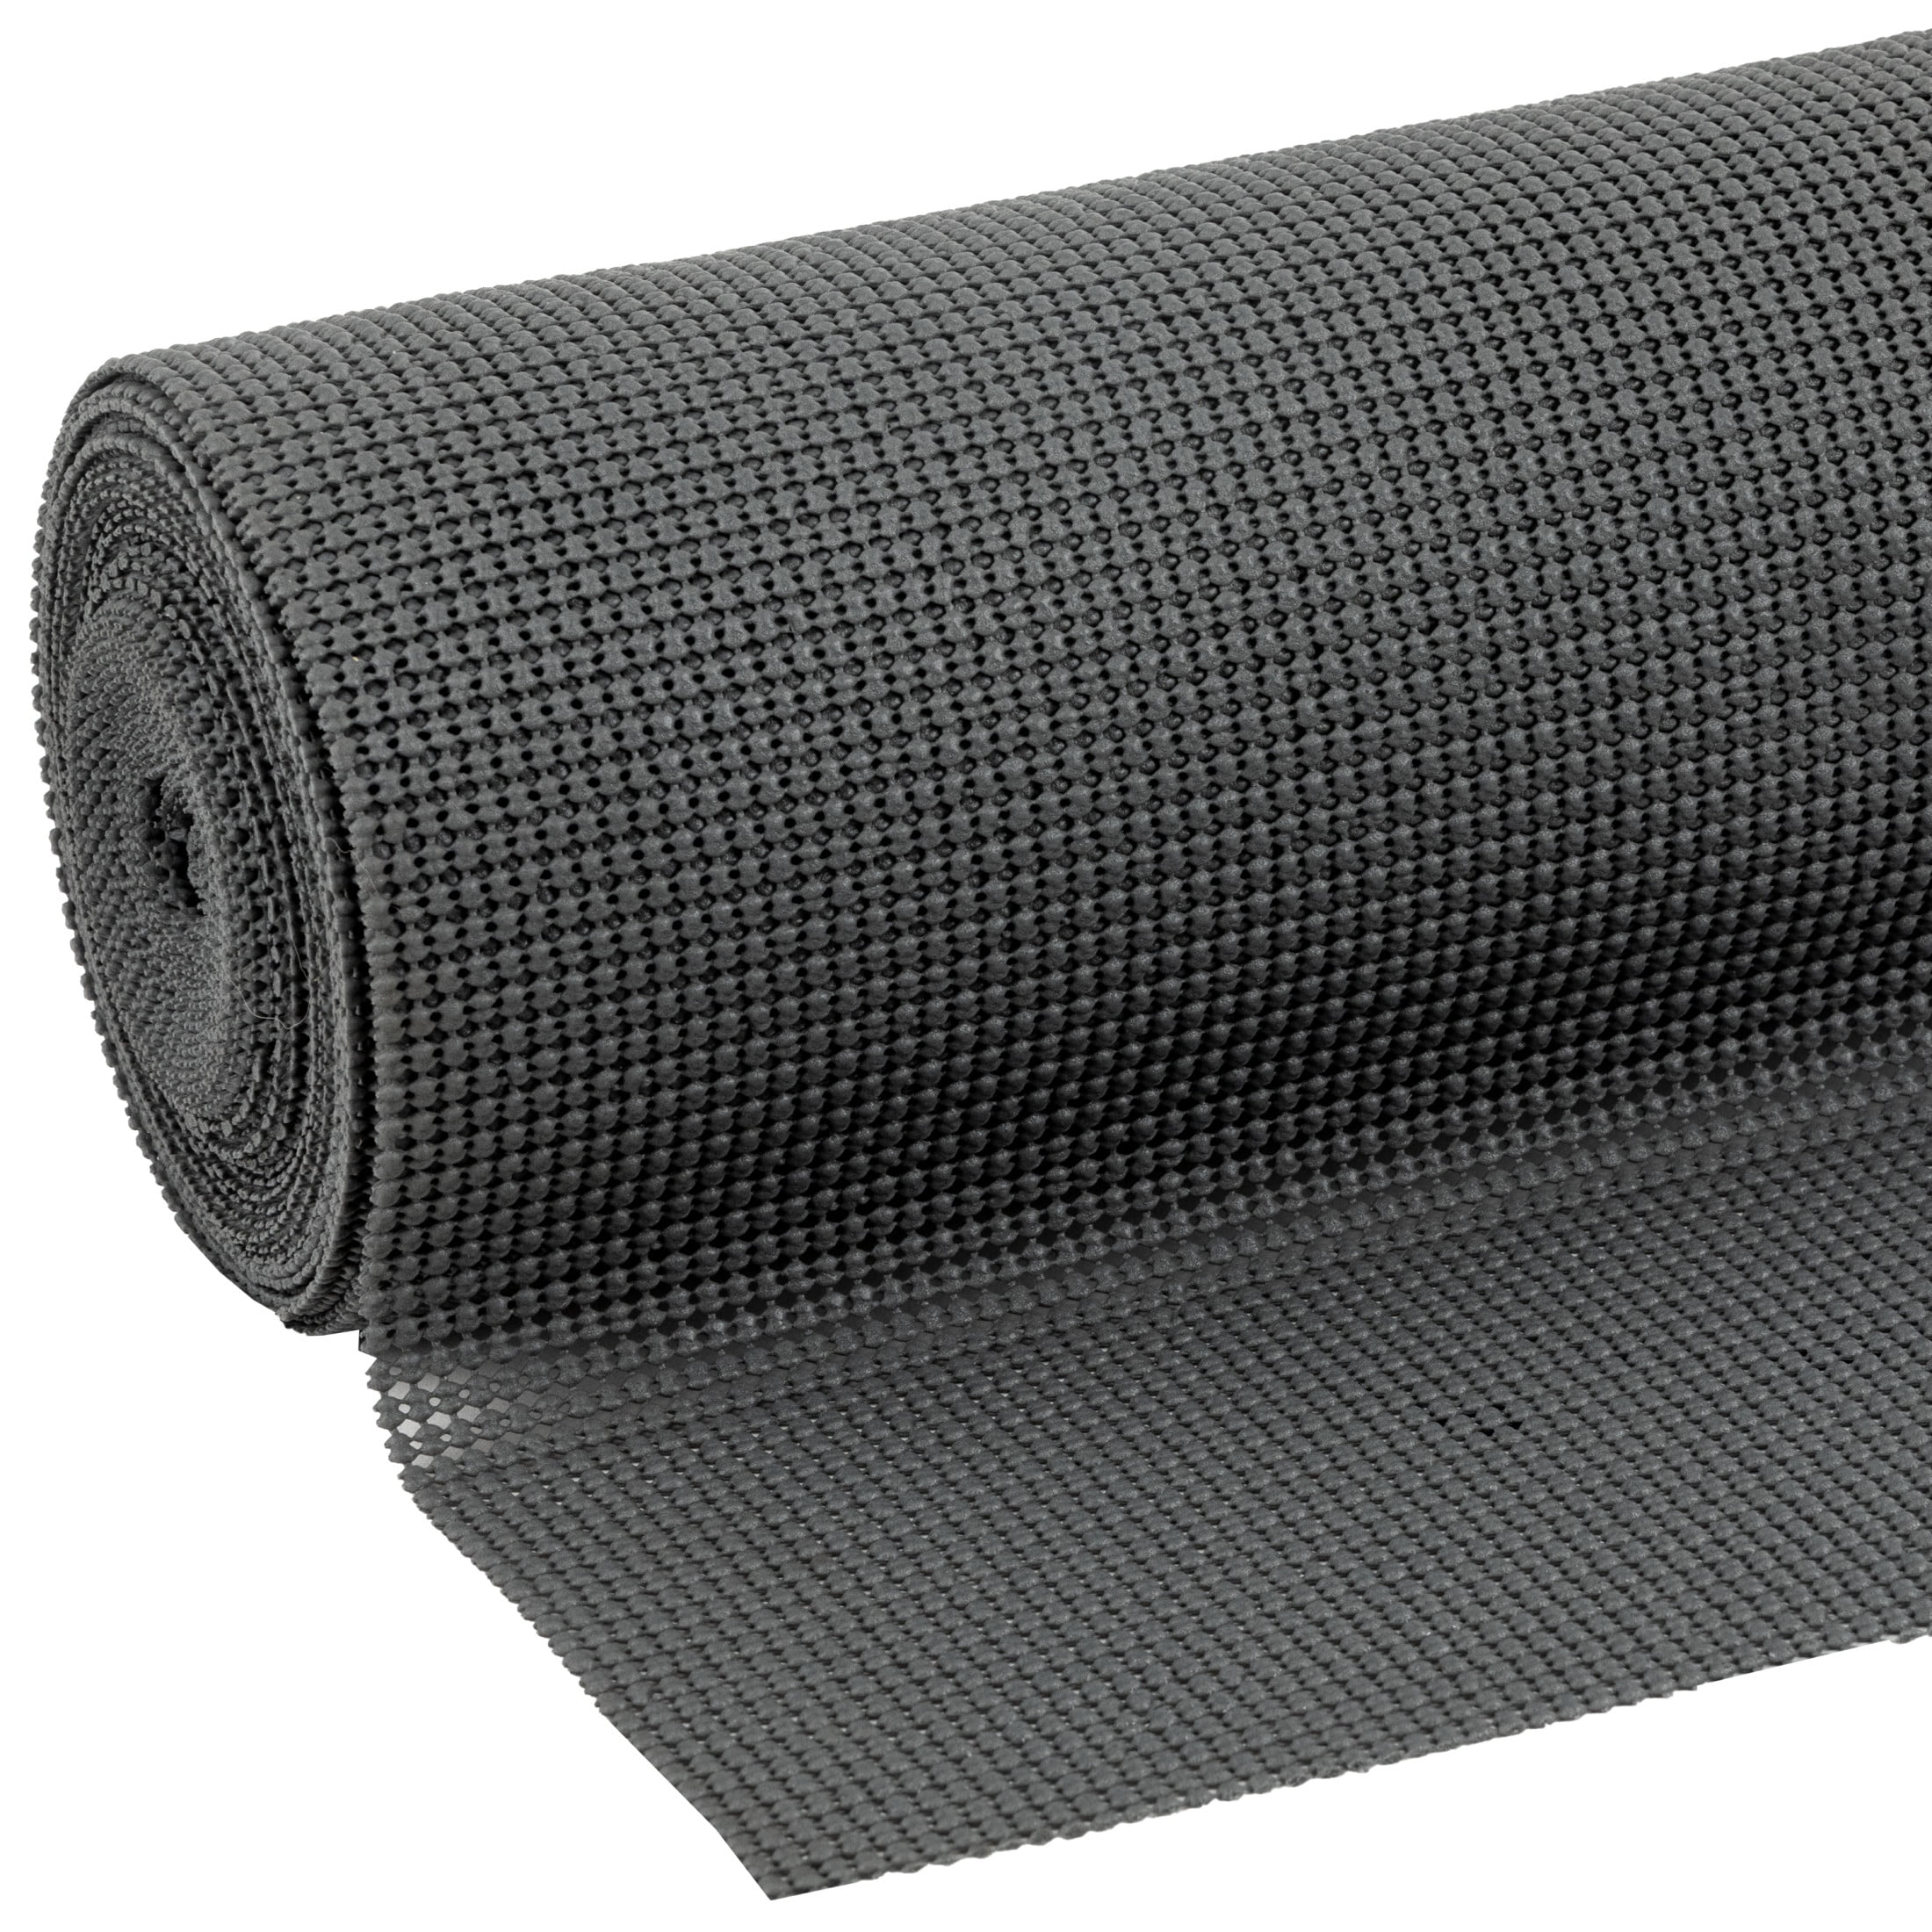 EasyLiner Select Grip Shelf Liner, Dark Gray, 20 in. x 6 ft. Roll